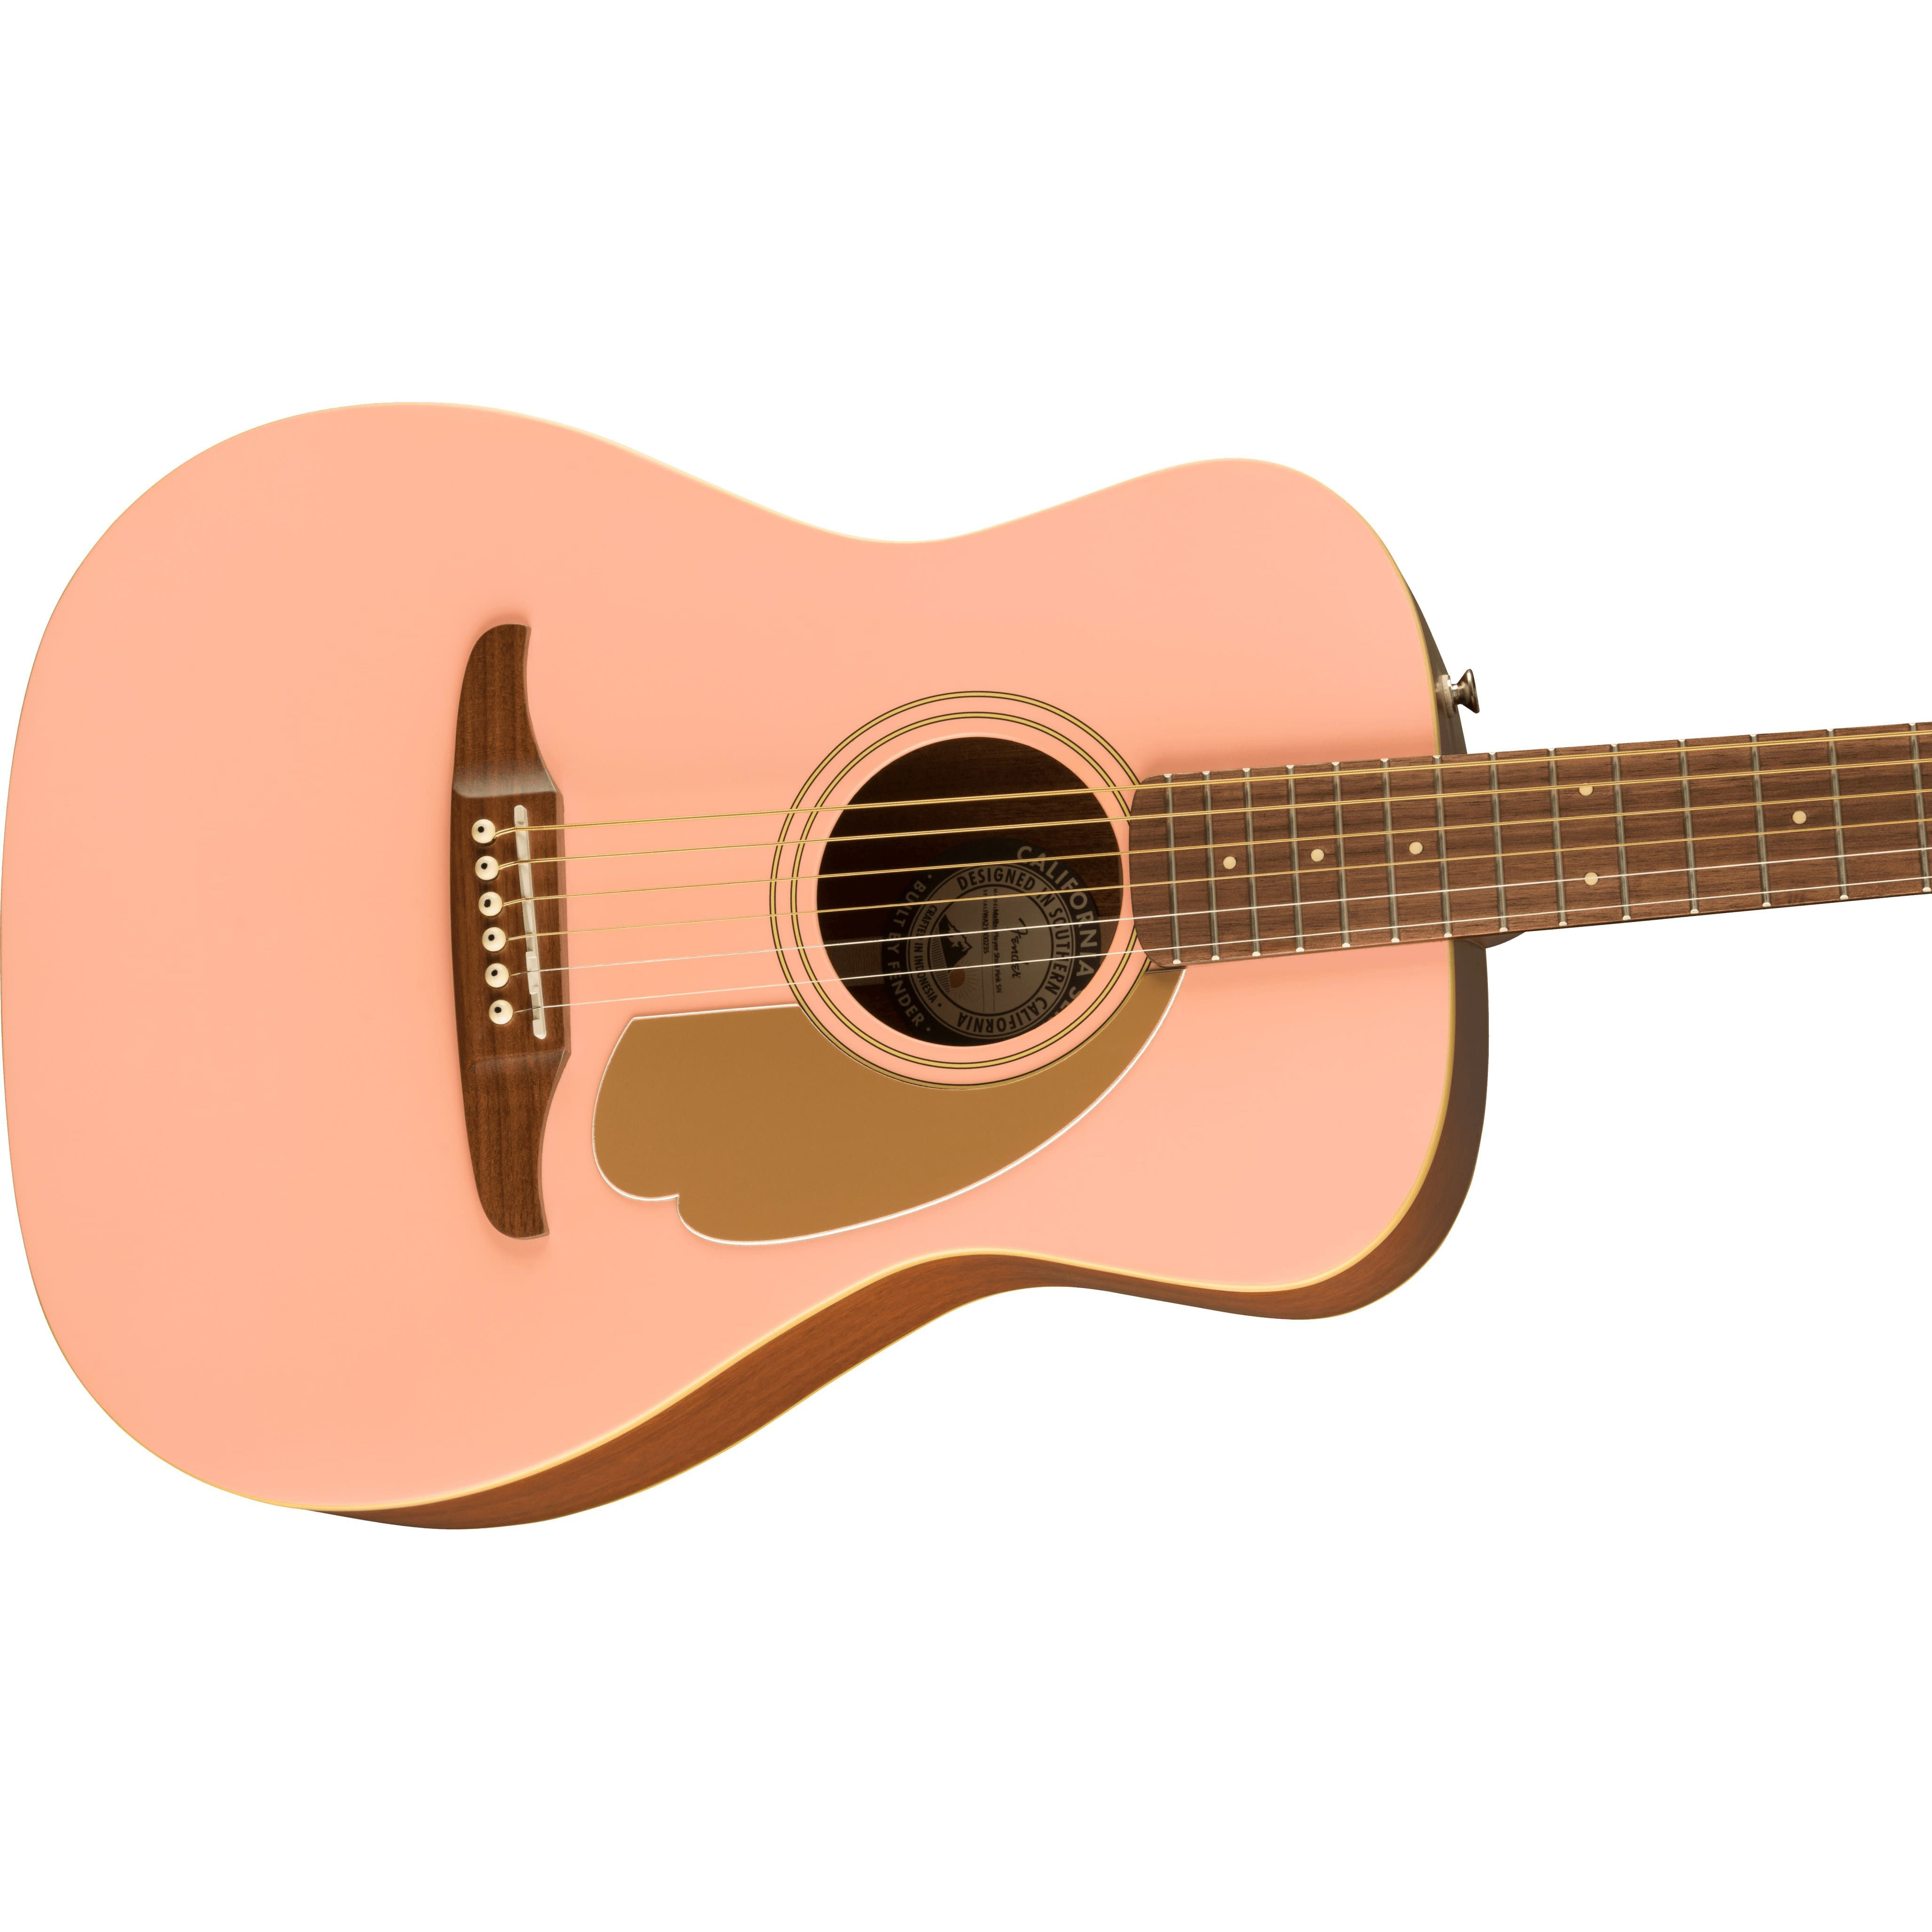 Fender Malibu Player Shell Pink Акустические гитары